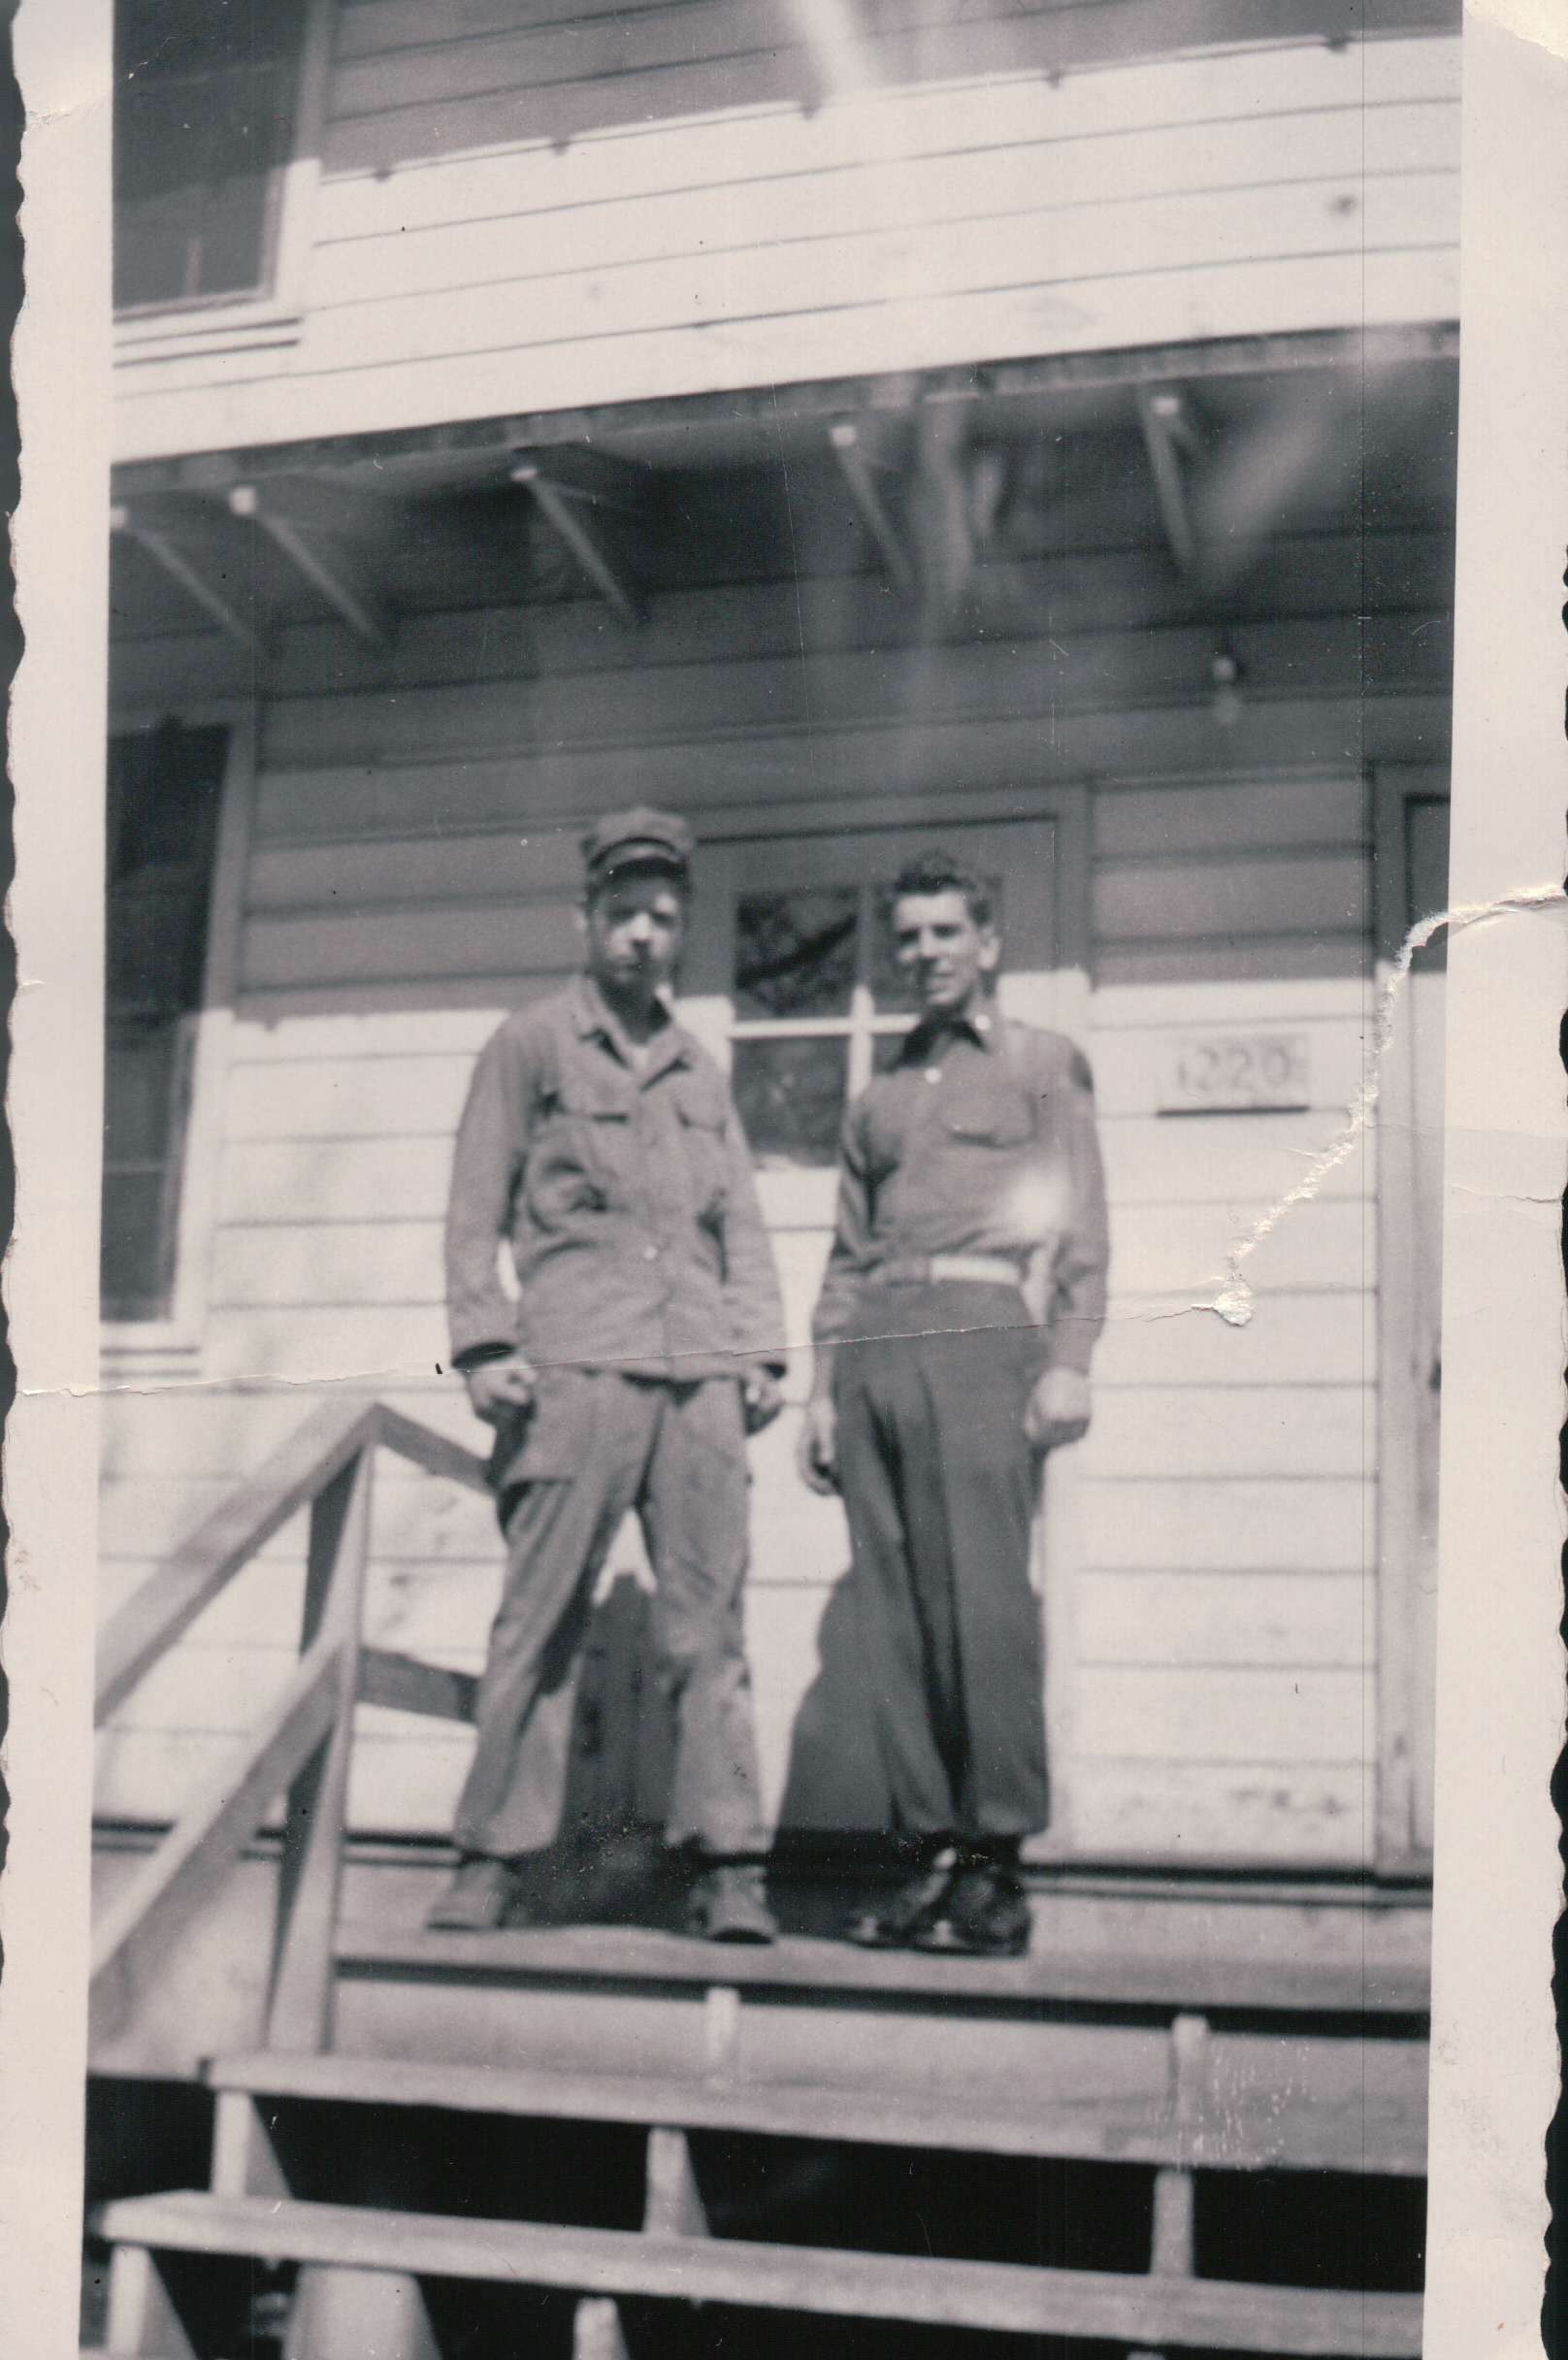 Auletti wearing his Korean War uniform